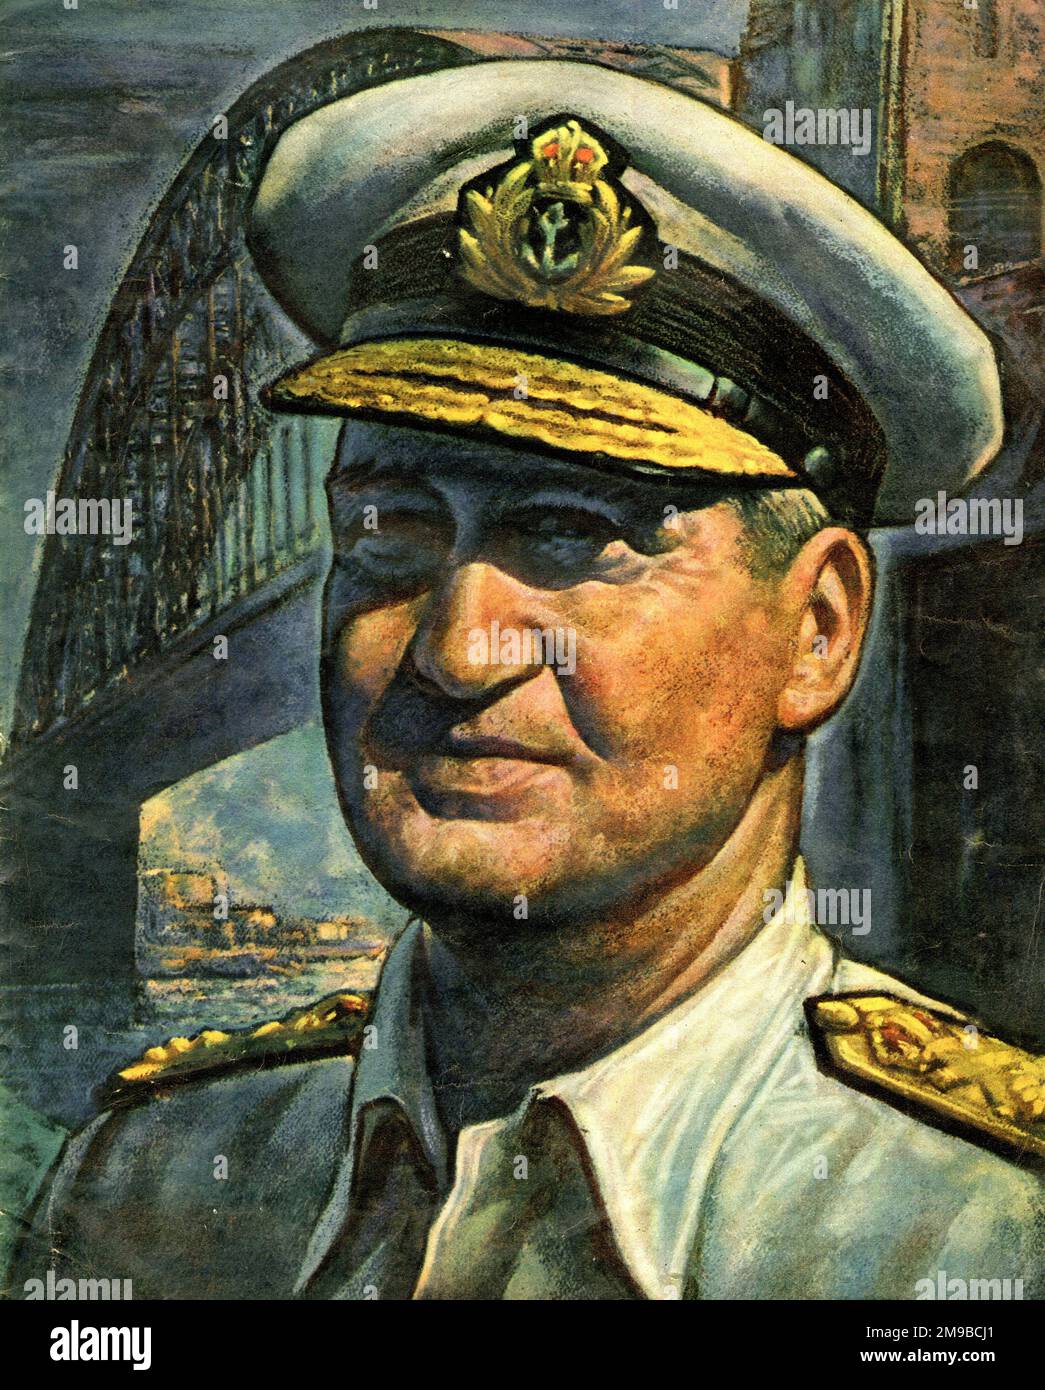 Admiral Sir Bruce Fraser, Commander-in-Chief, British Pacific Fleet during WW2, based in Sydney, Australia Stock Photo